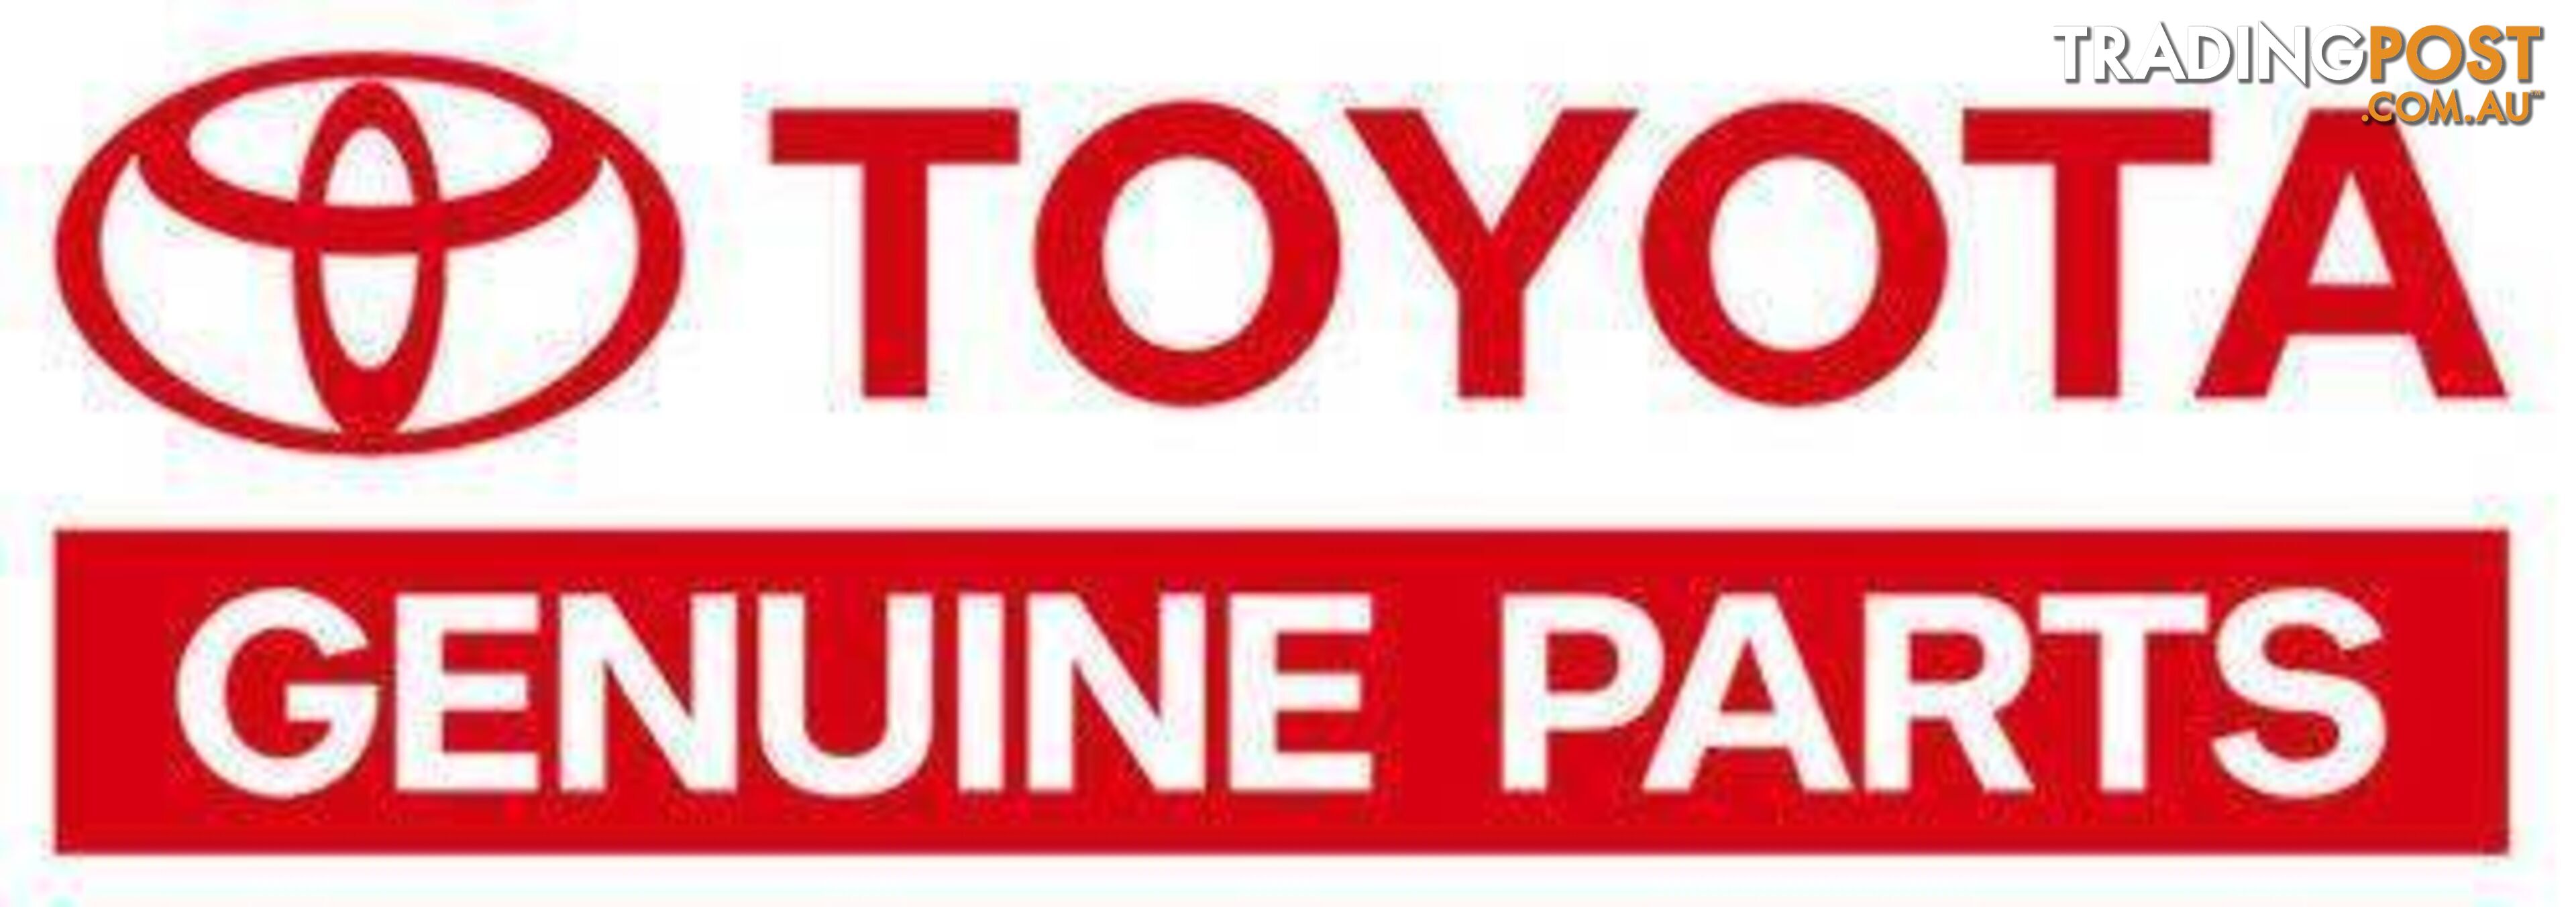 TOYOTA TRANSMITTER KEY NEW UN-CUT Toyota Part No.: 89785-35020